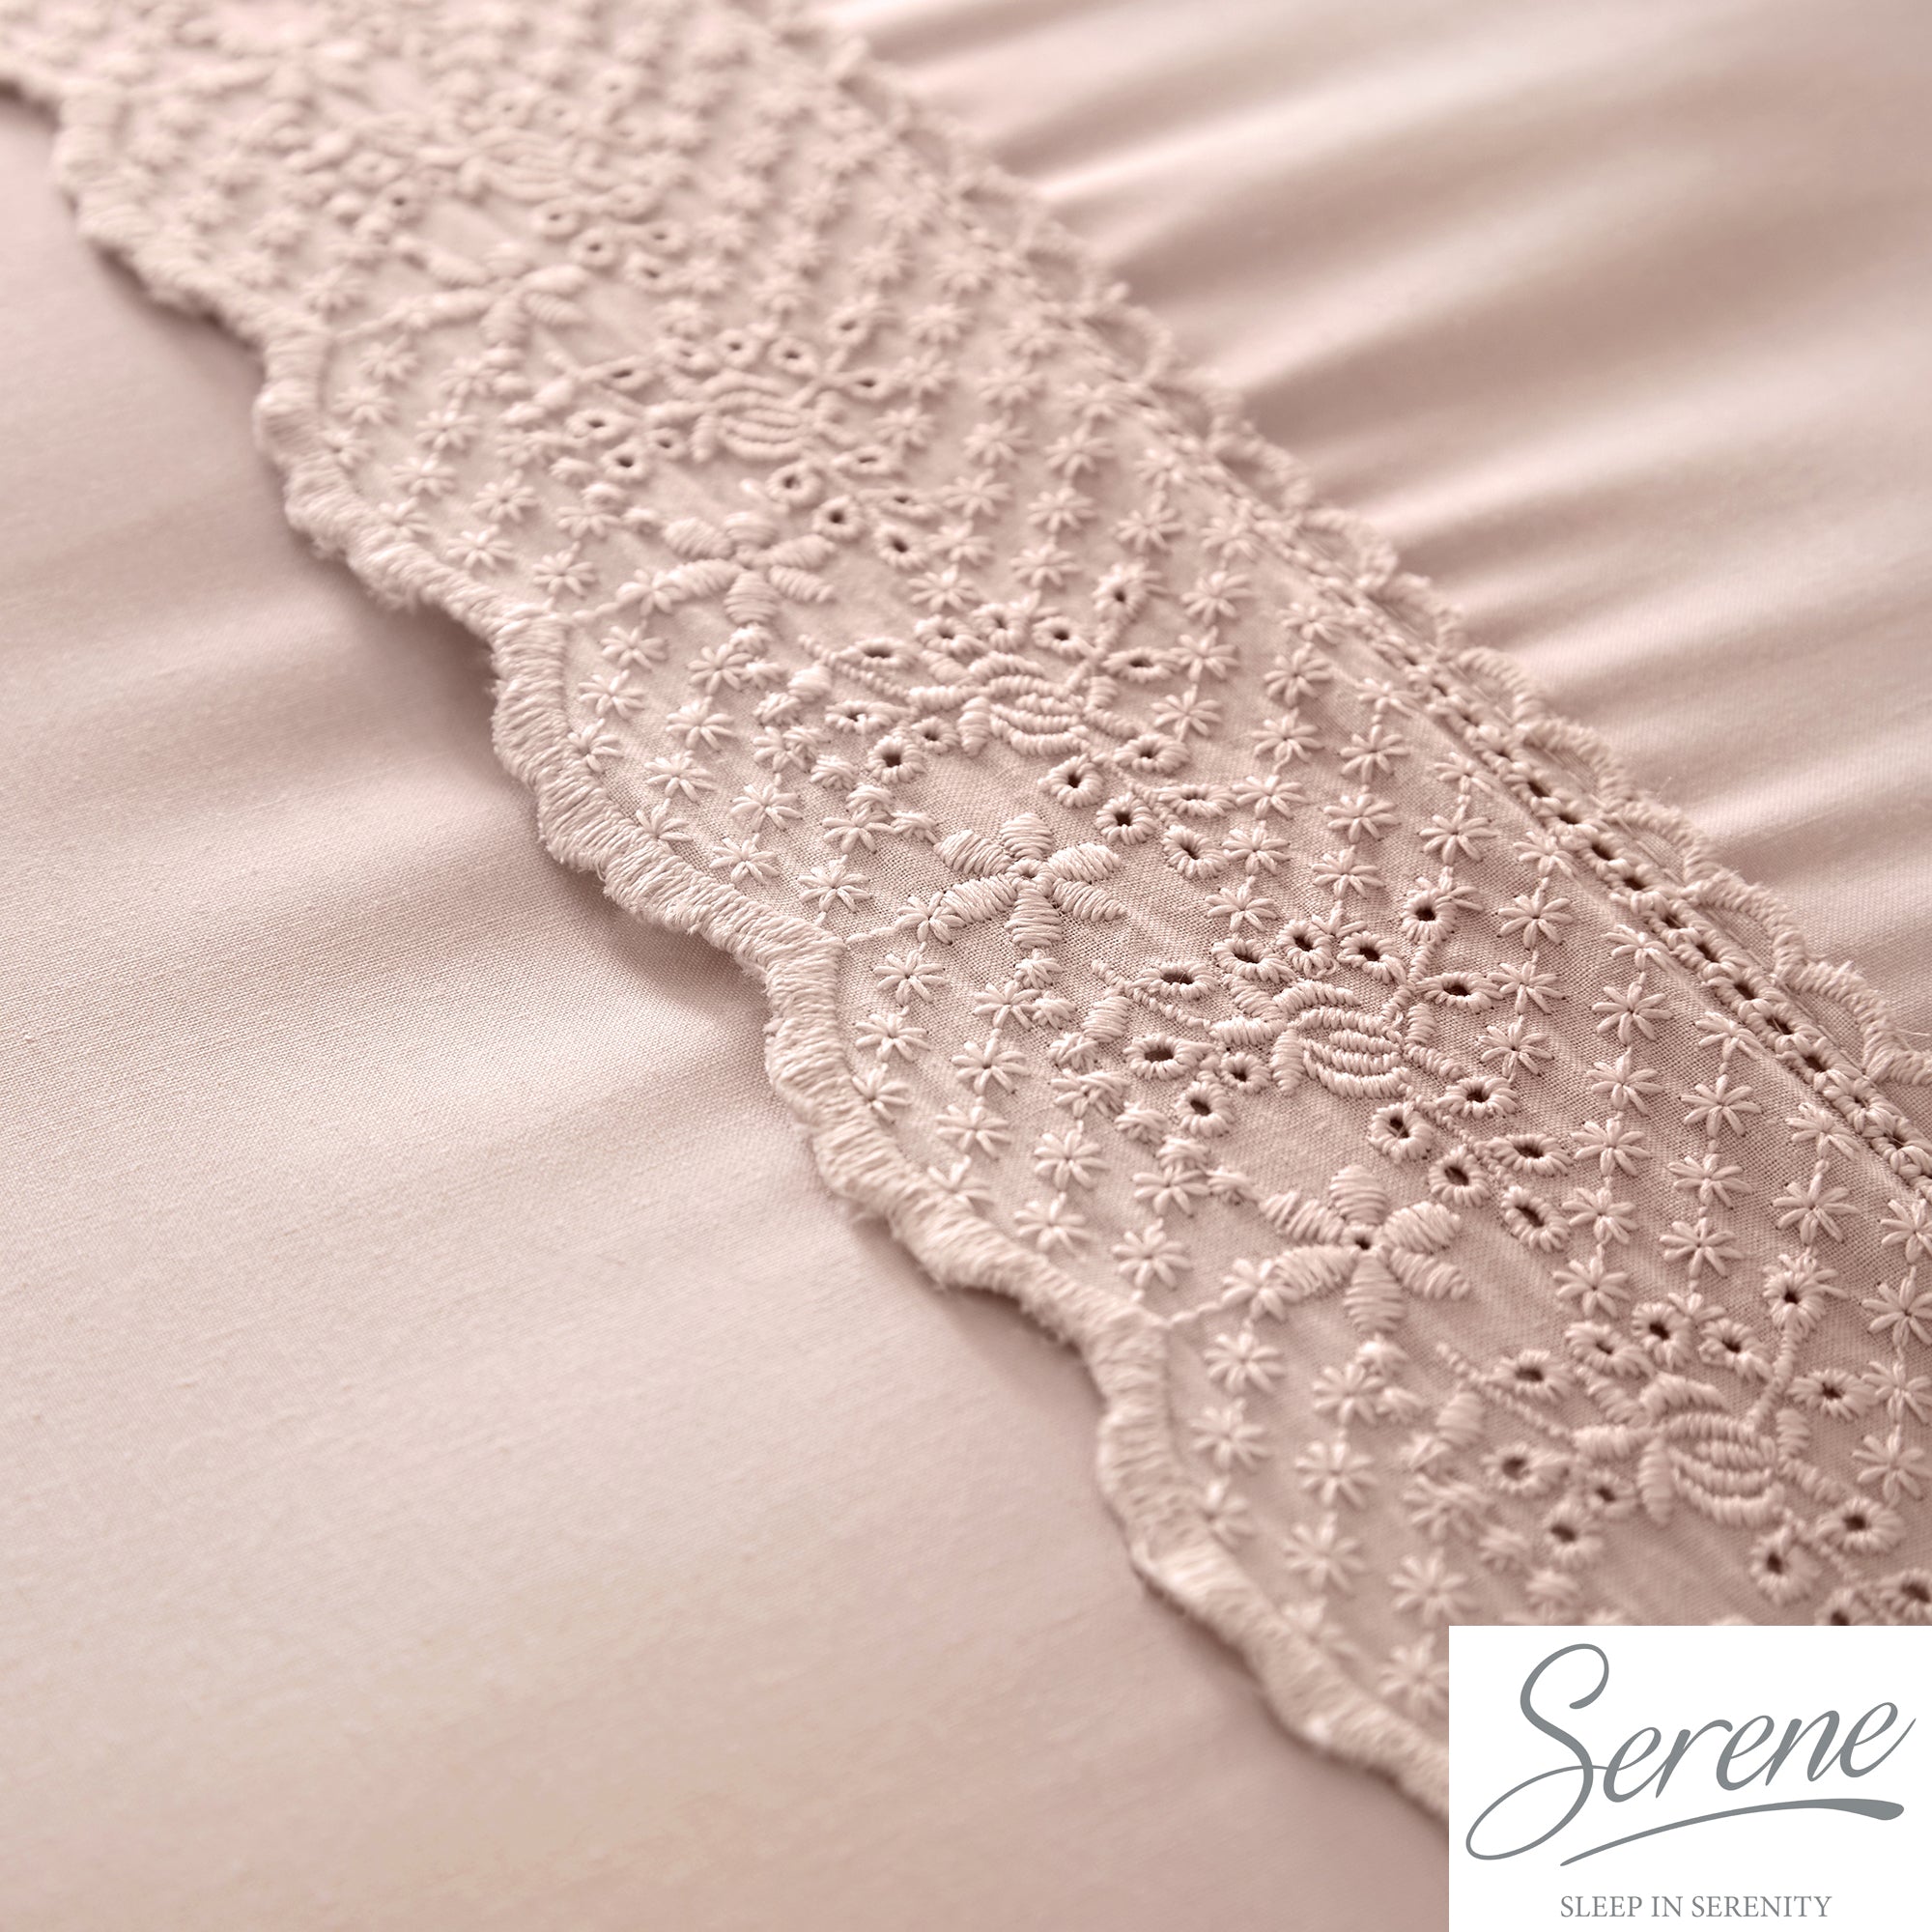 Renaissance - Easy Care Lace Trim Duvet Cover Set in Blush - by Serene